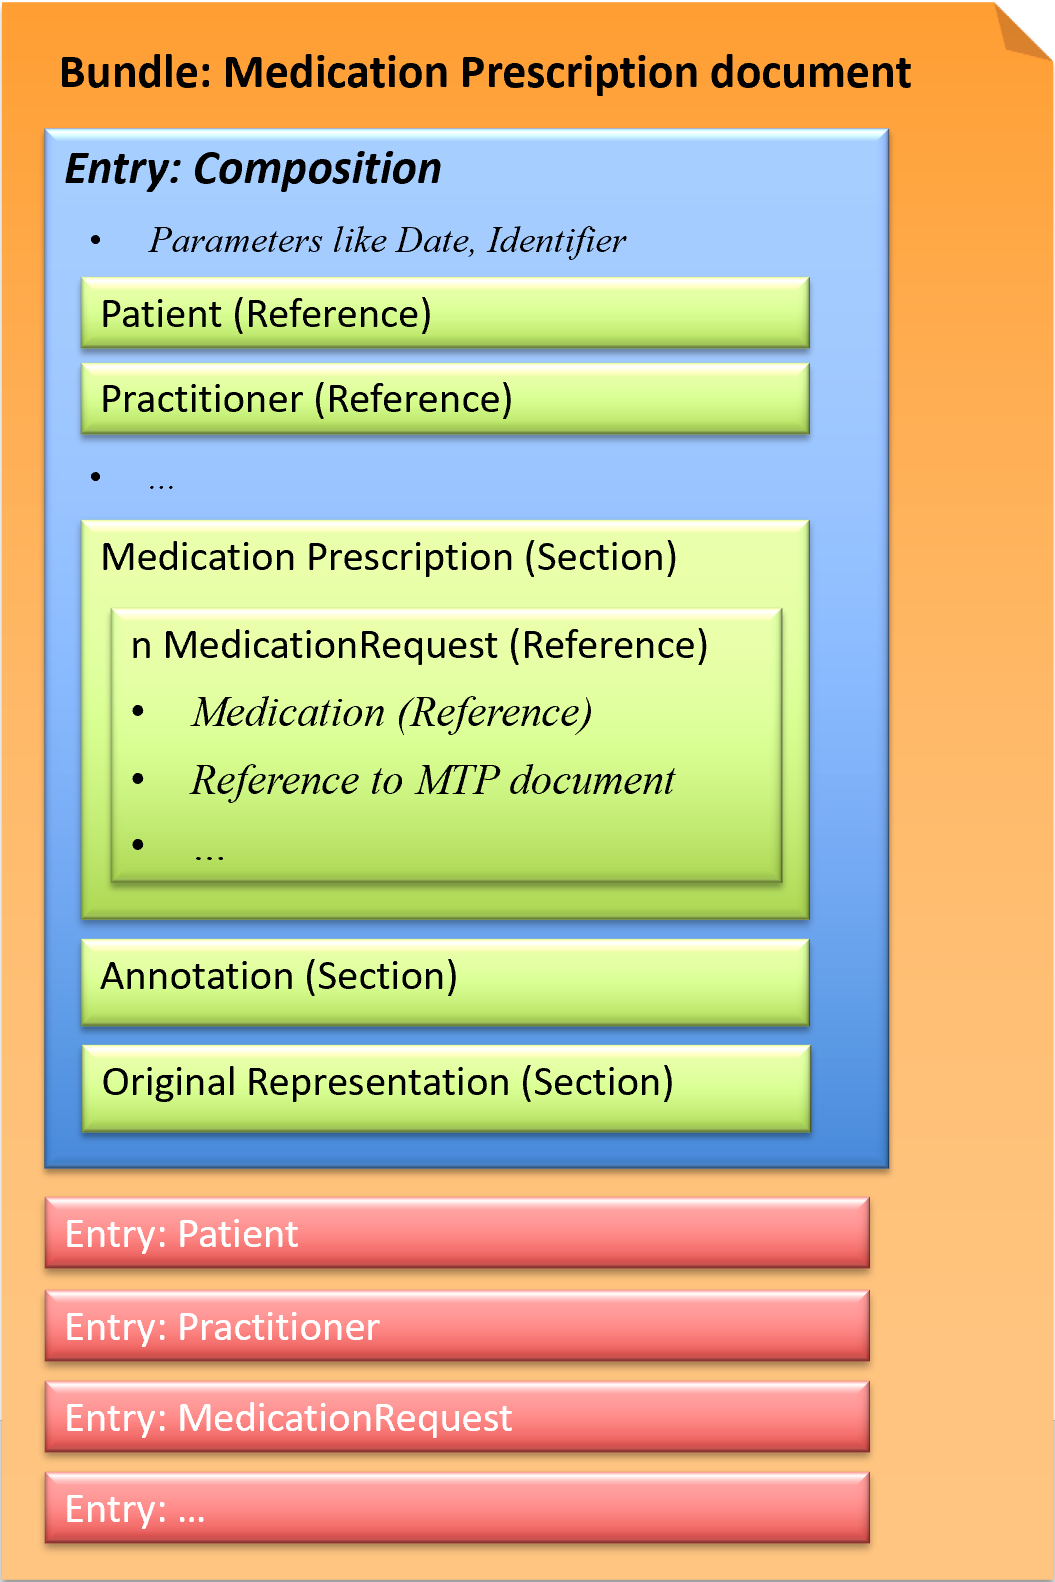 Fig.: Medication Prescription document